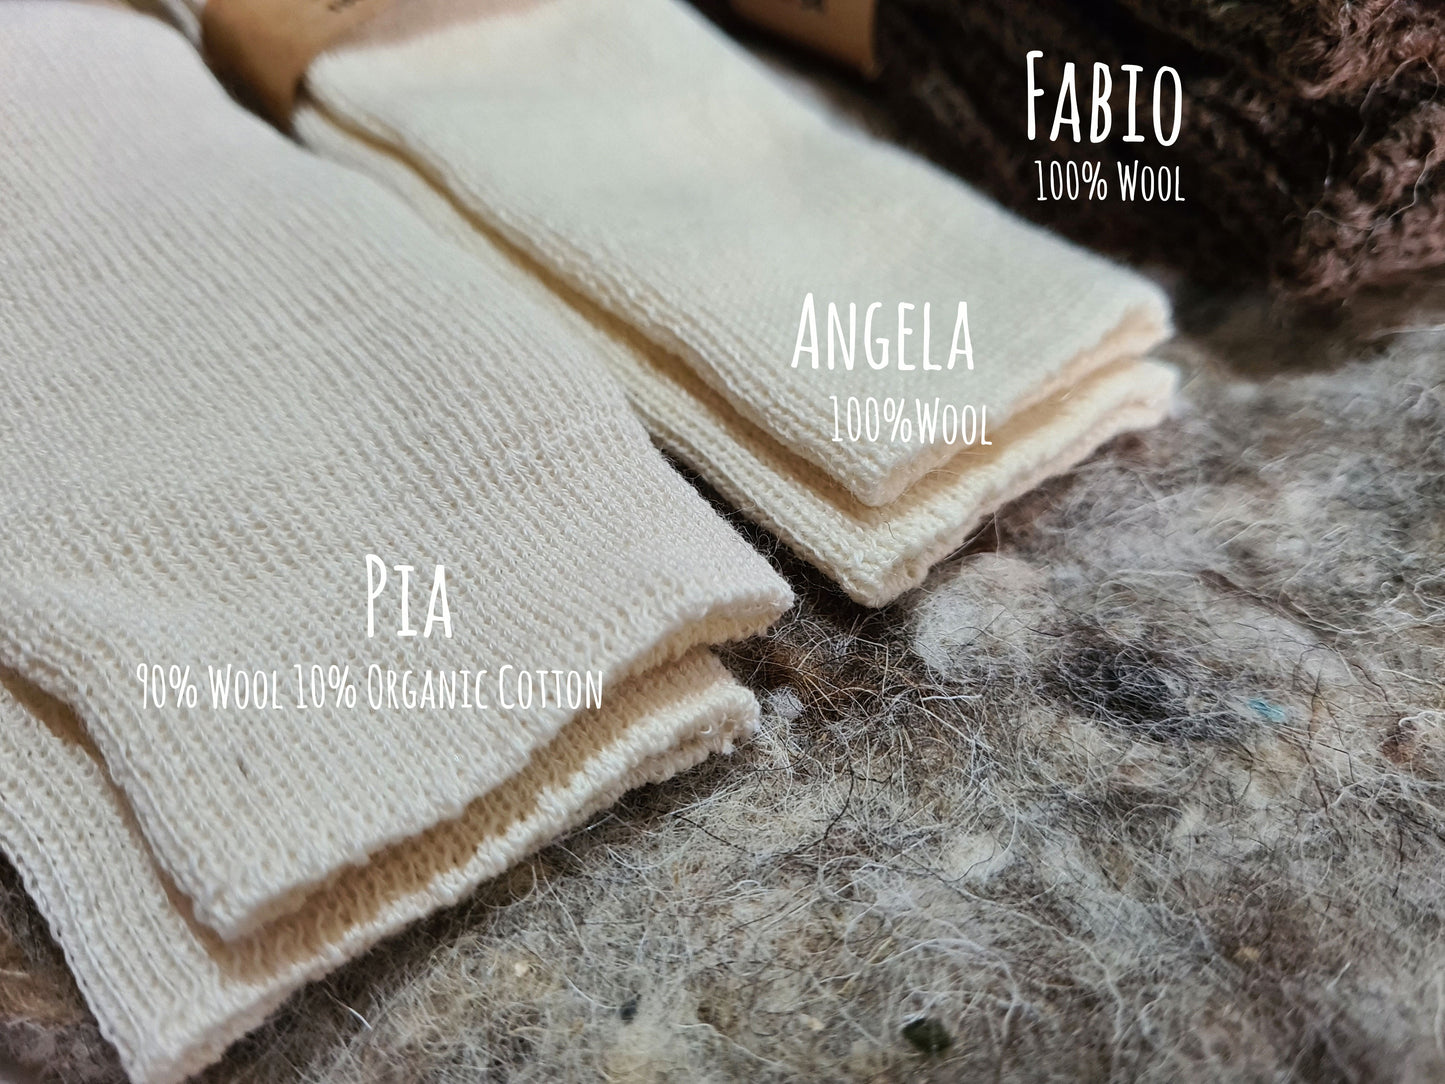 Pia Lungo (90% wool/10% organic cotton)